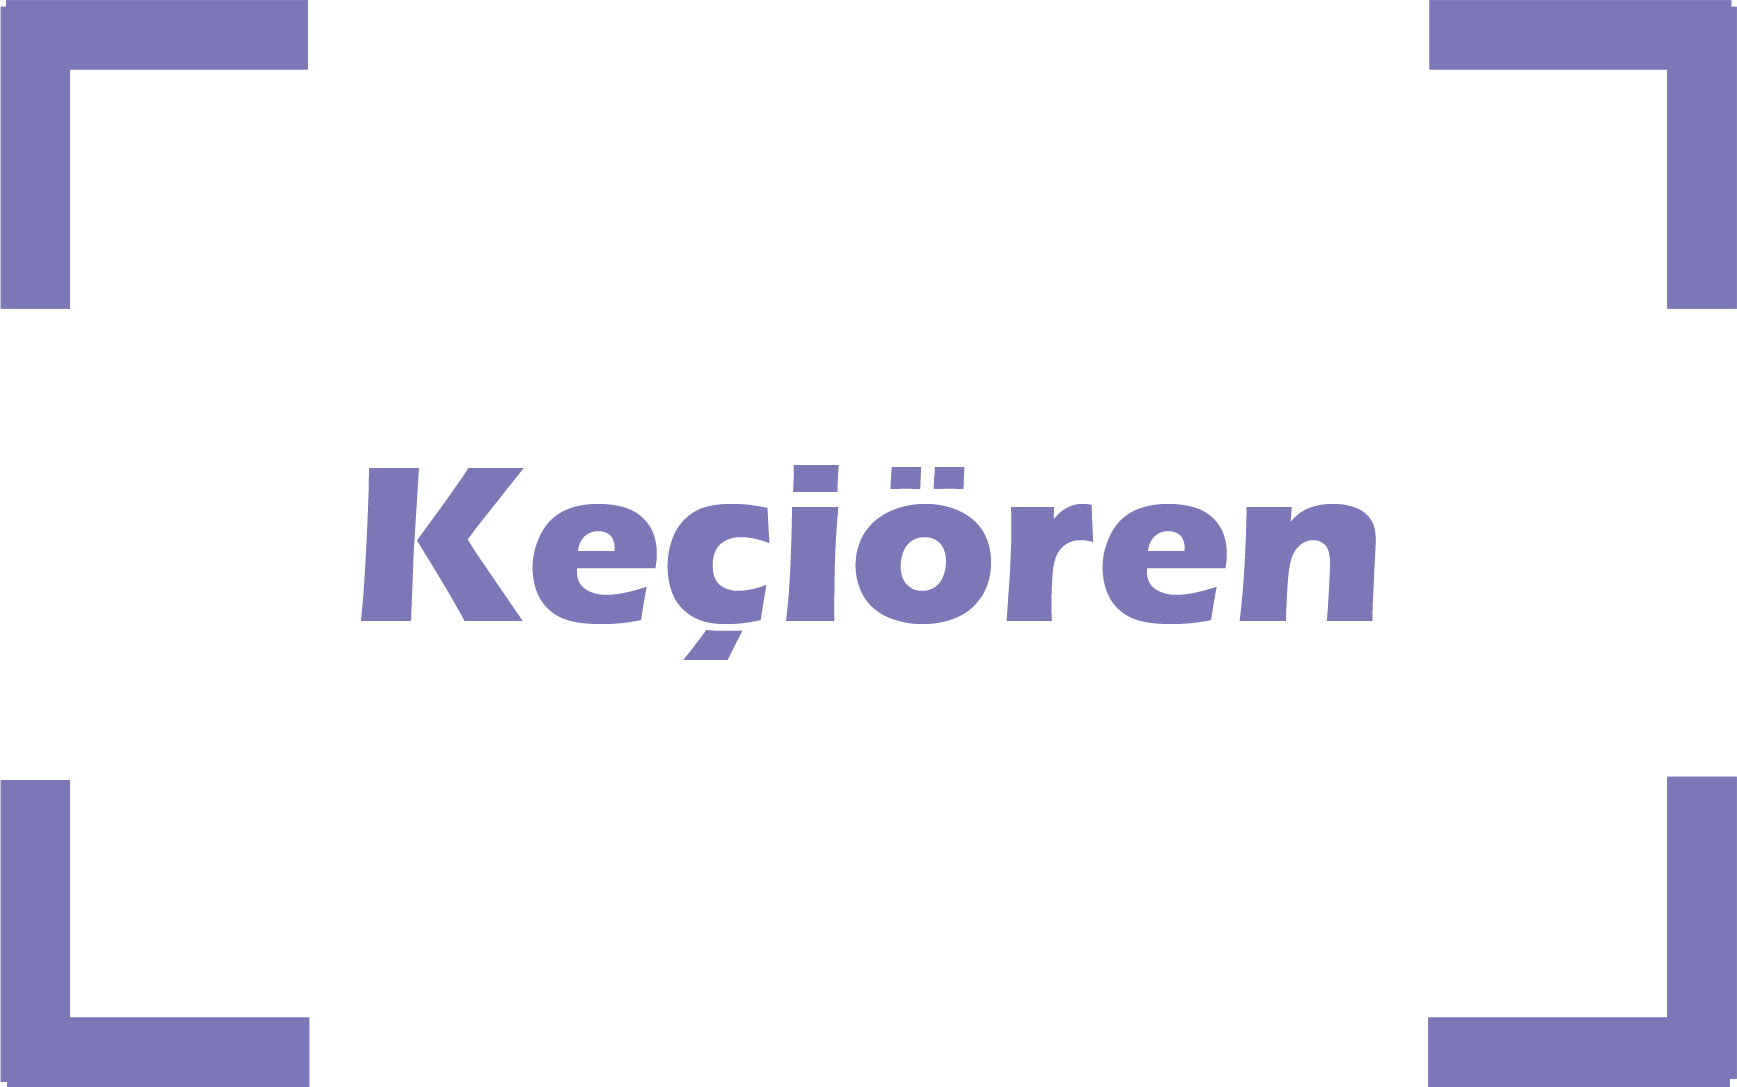 images/Kecioren.png